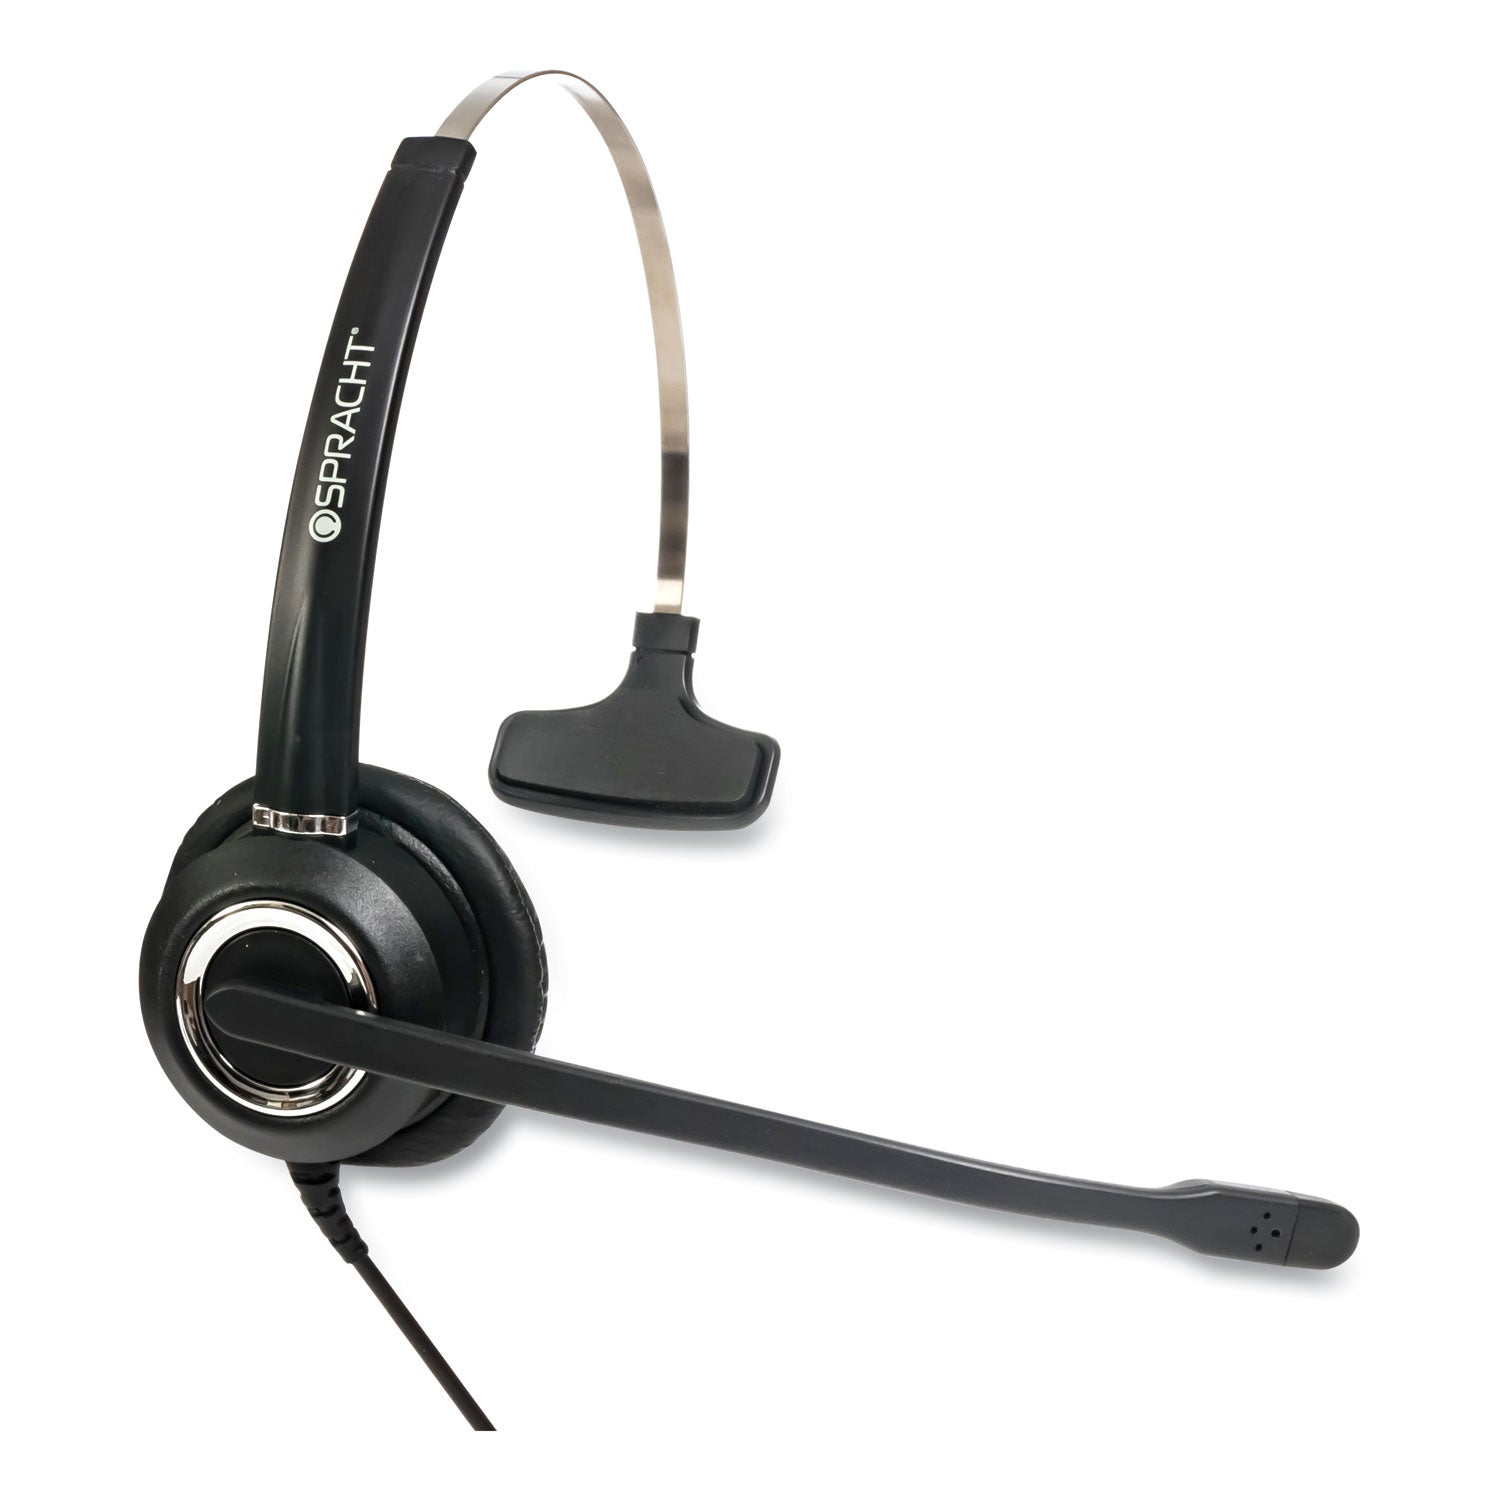 zum-zumrj9m-monaural-over-the-head-headset-black_sptzumrj9m - 5